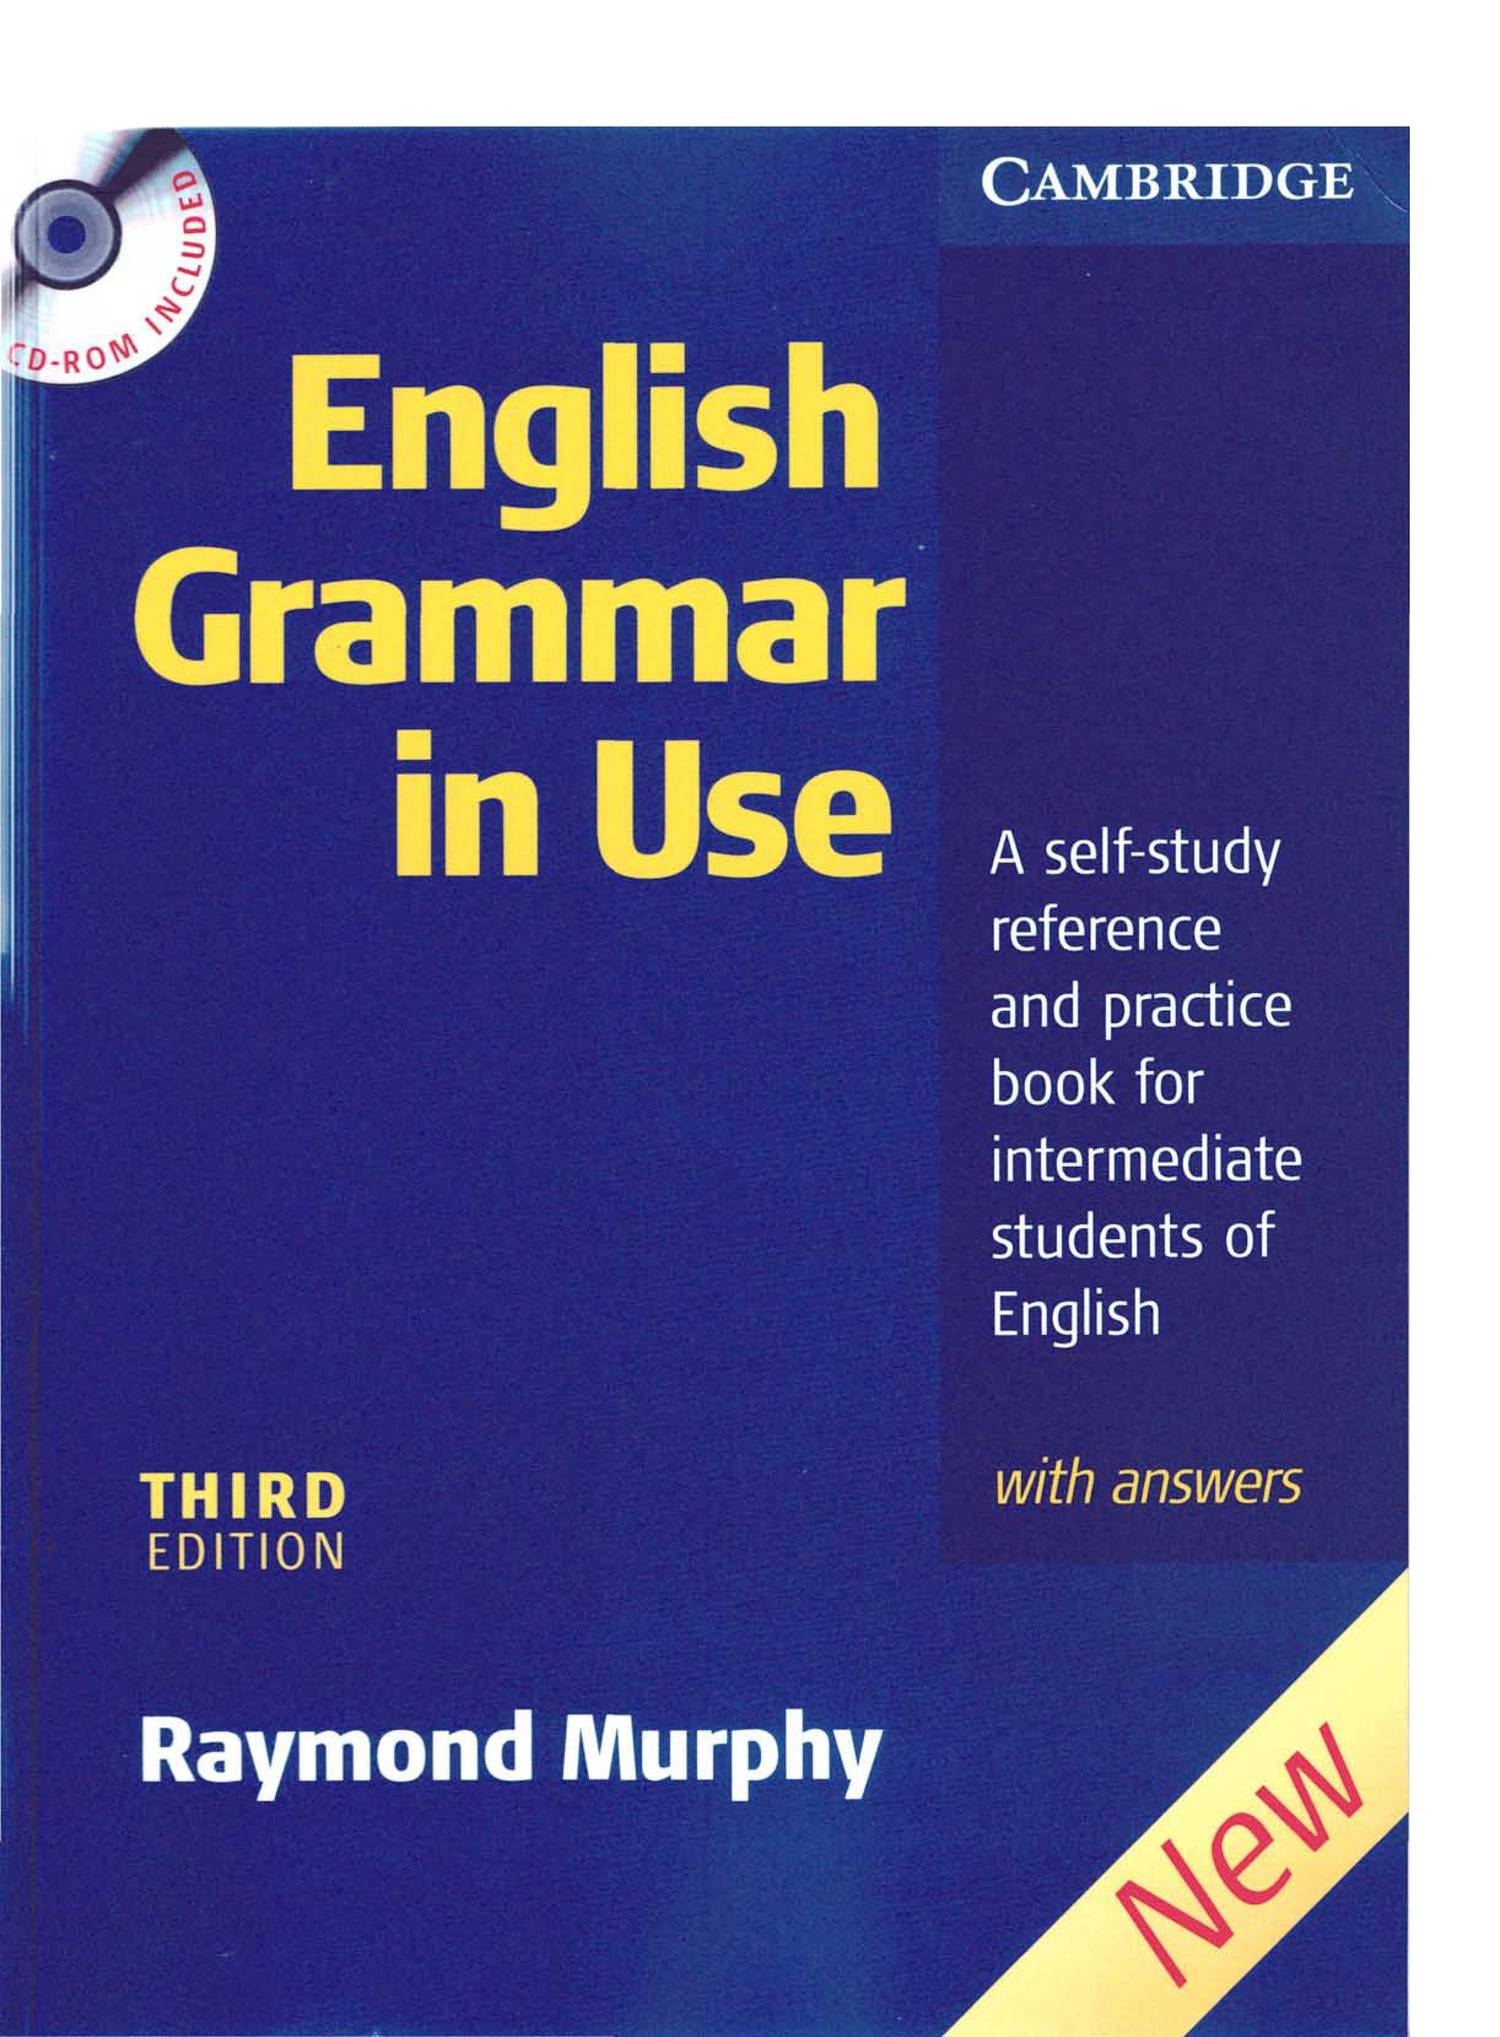 Cambridge - English Grammar in Use (Intermediate) (2005).pdf | DocDroid